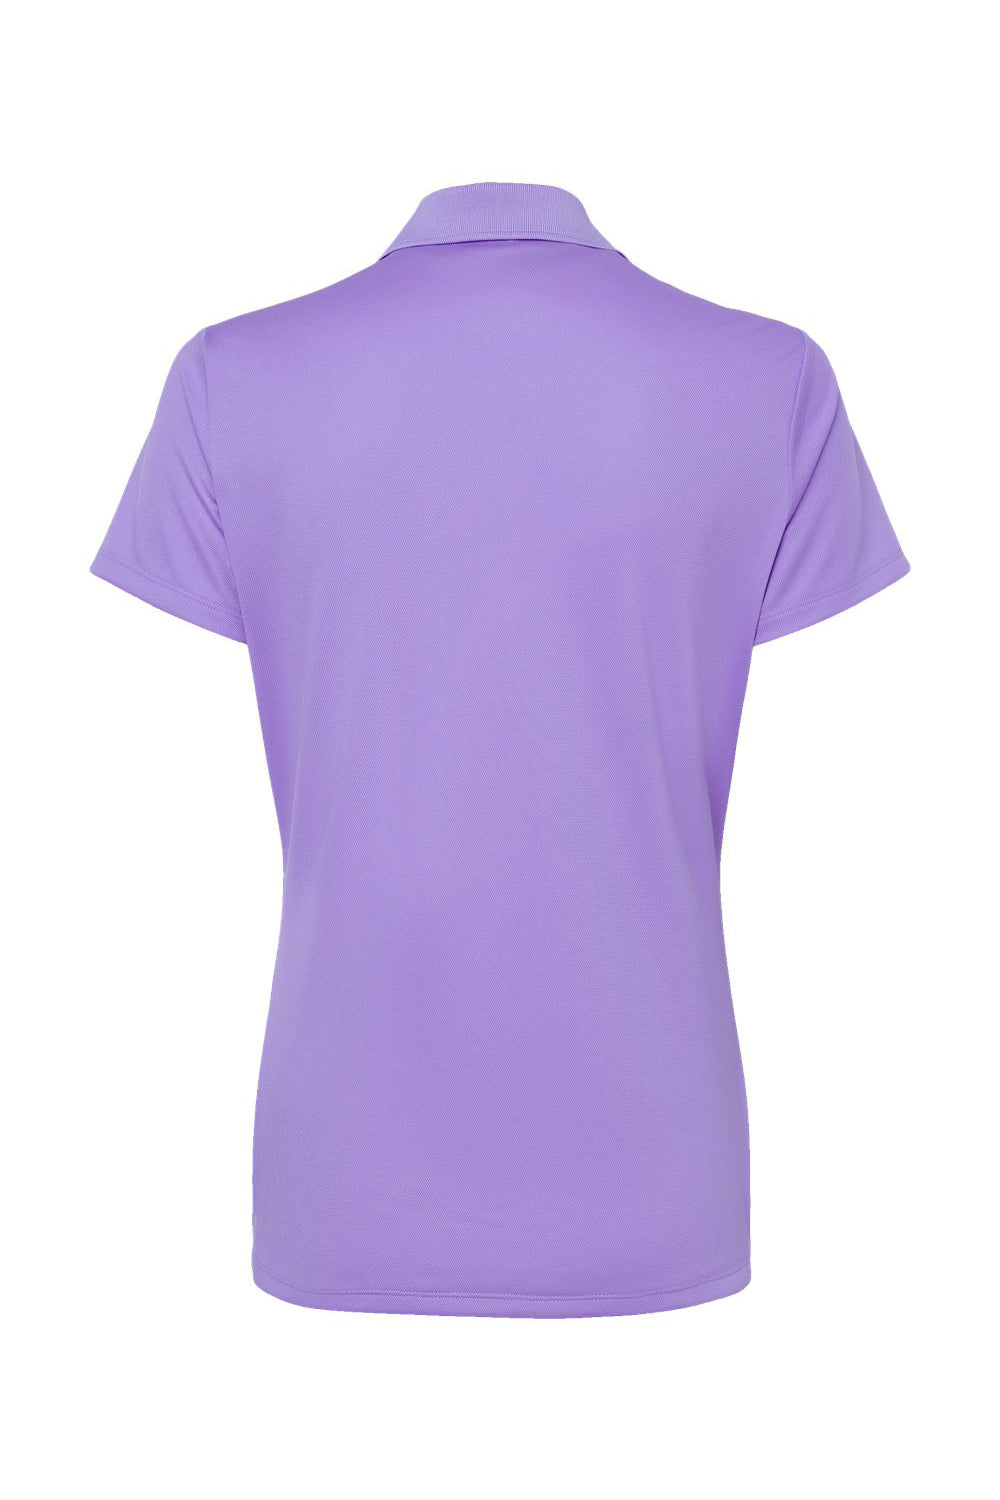 Adidas A431 Womens Basic Short Sleeve Polo Shirt Light Flash Purple Flat Back